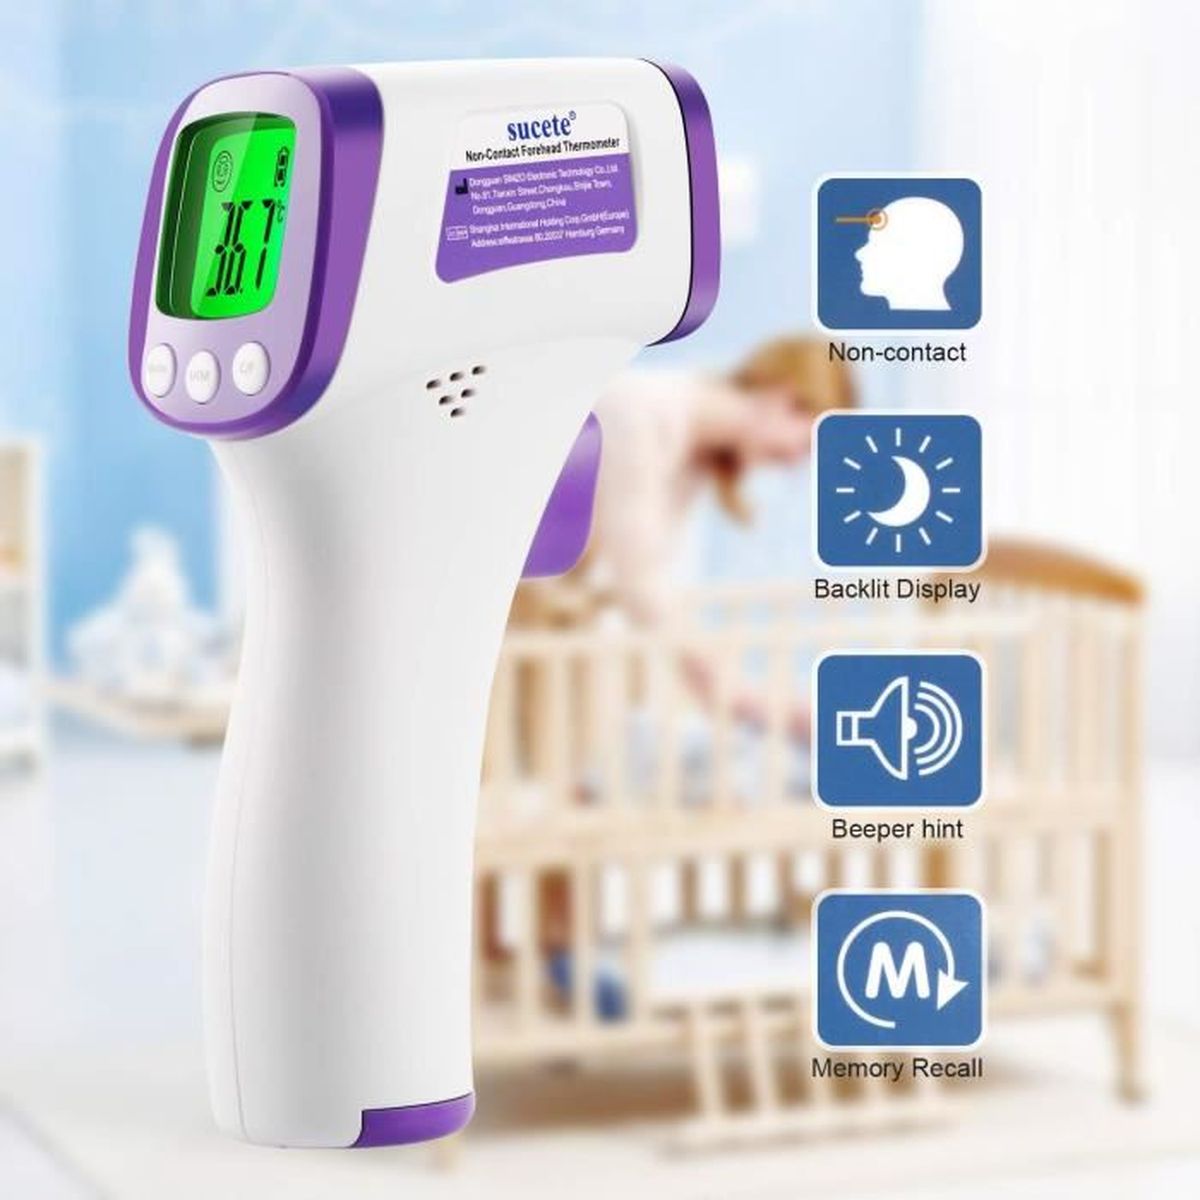 Thermometre Frontal Infrarouge Thermometre Medical Sans Contact Pour Adultes Enfants Bebes Avec Alerte Fievre Thermometre Numeriq Cdiscount